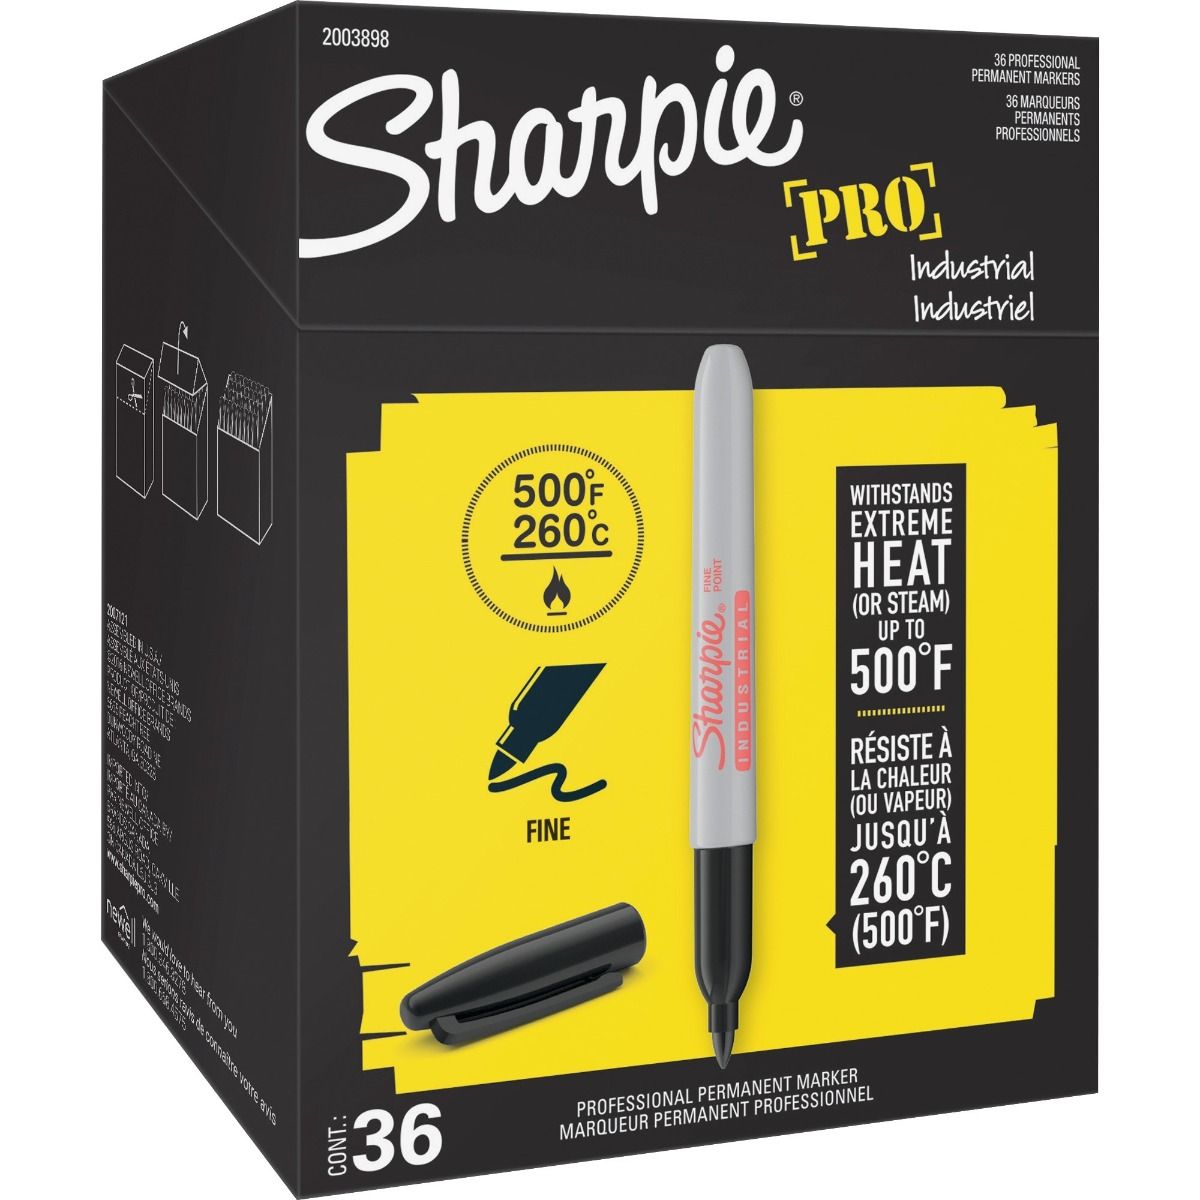 Sharpie Industrial Pro Black Permanent Markers (2003898)[Fine